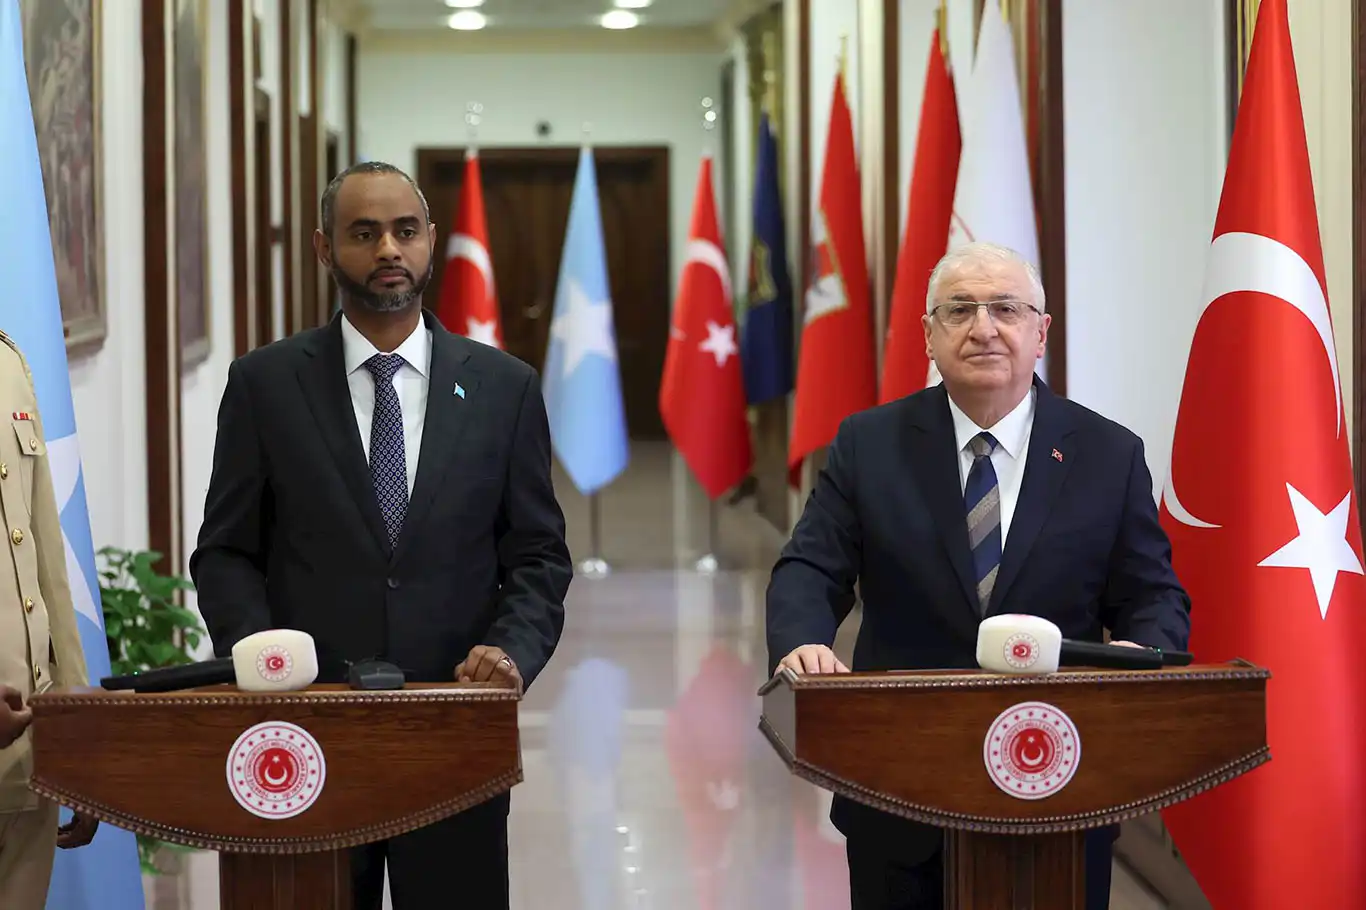 Türkiye, Somalia deepen ties with defense and economic pact, signaling regional ambitions